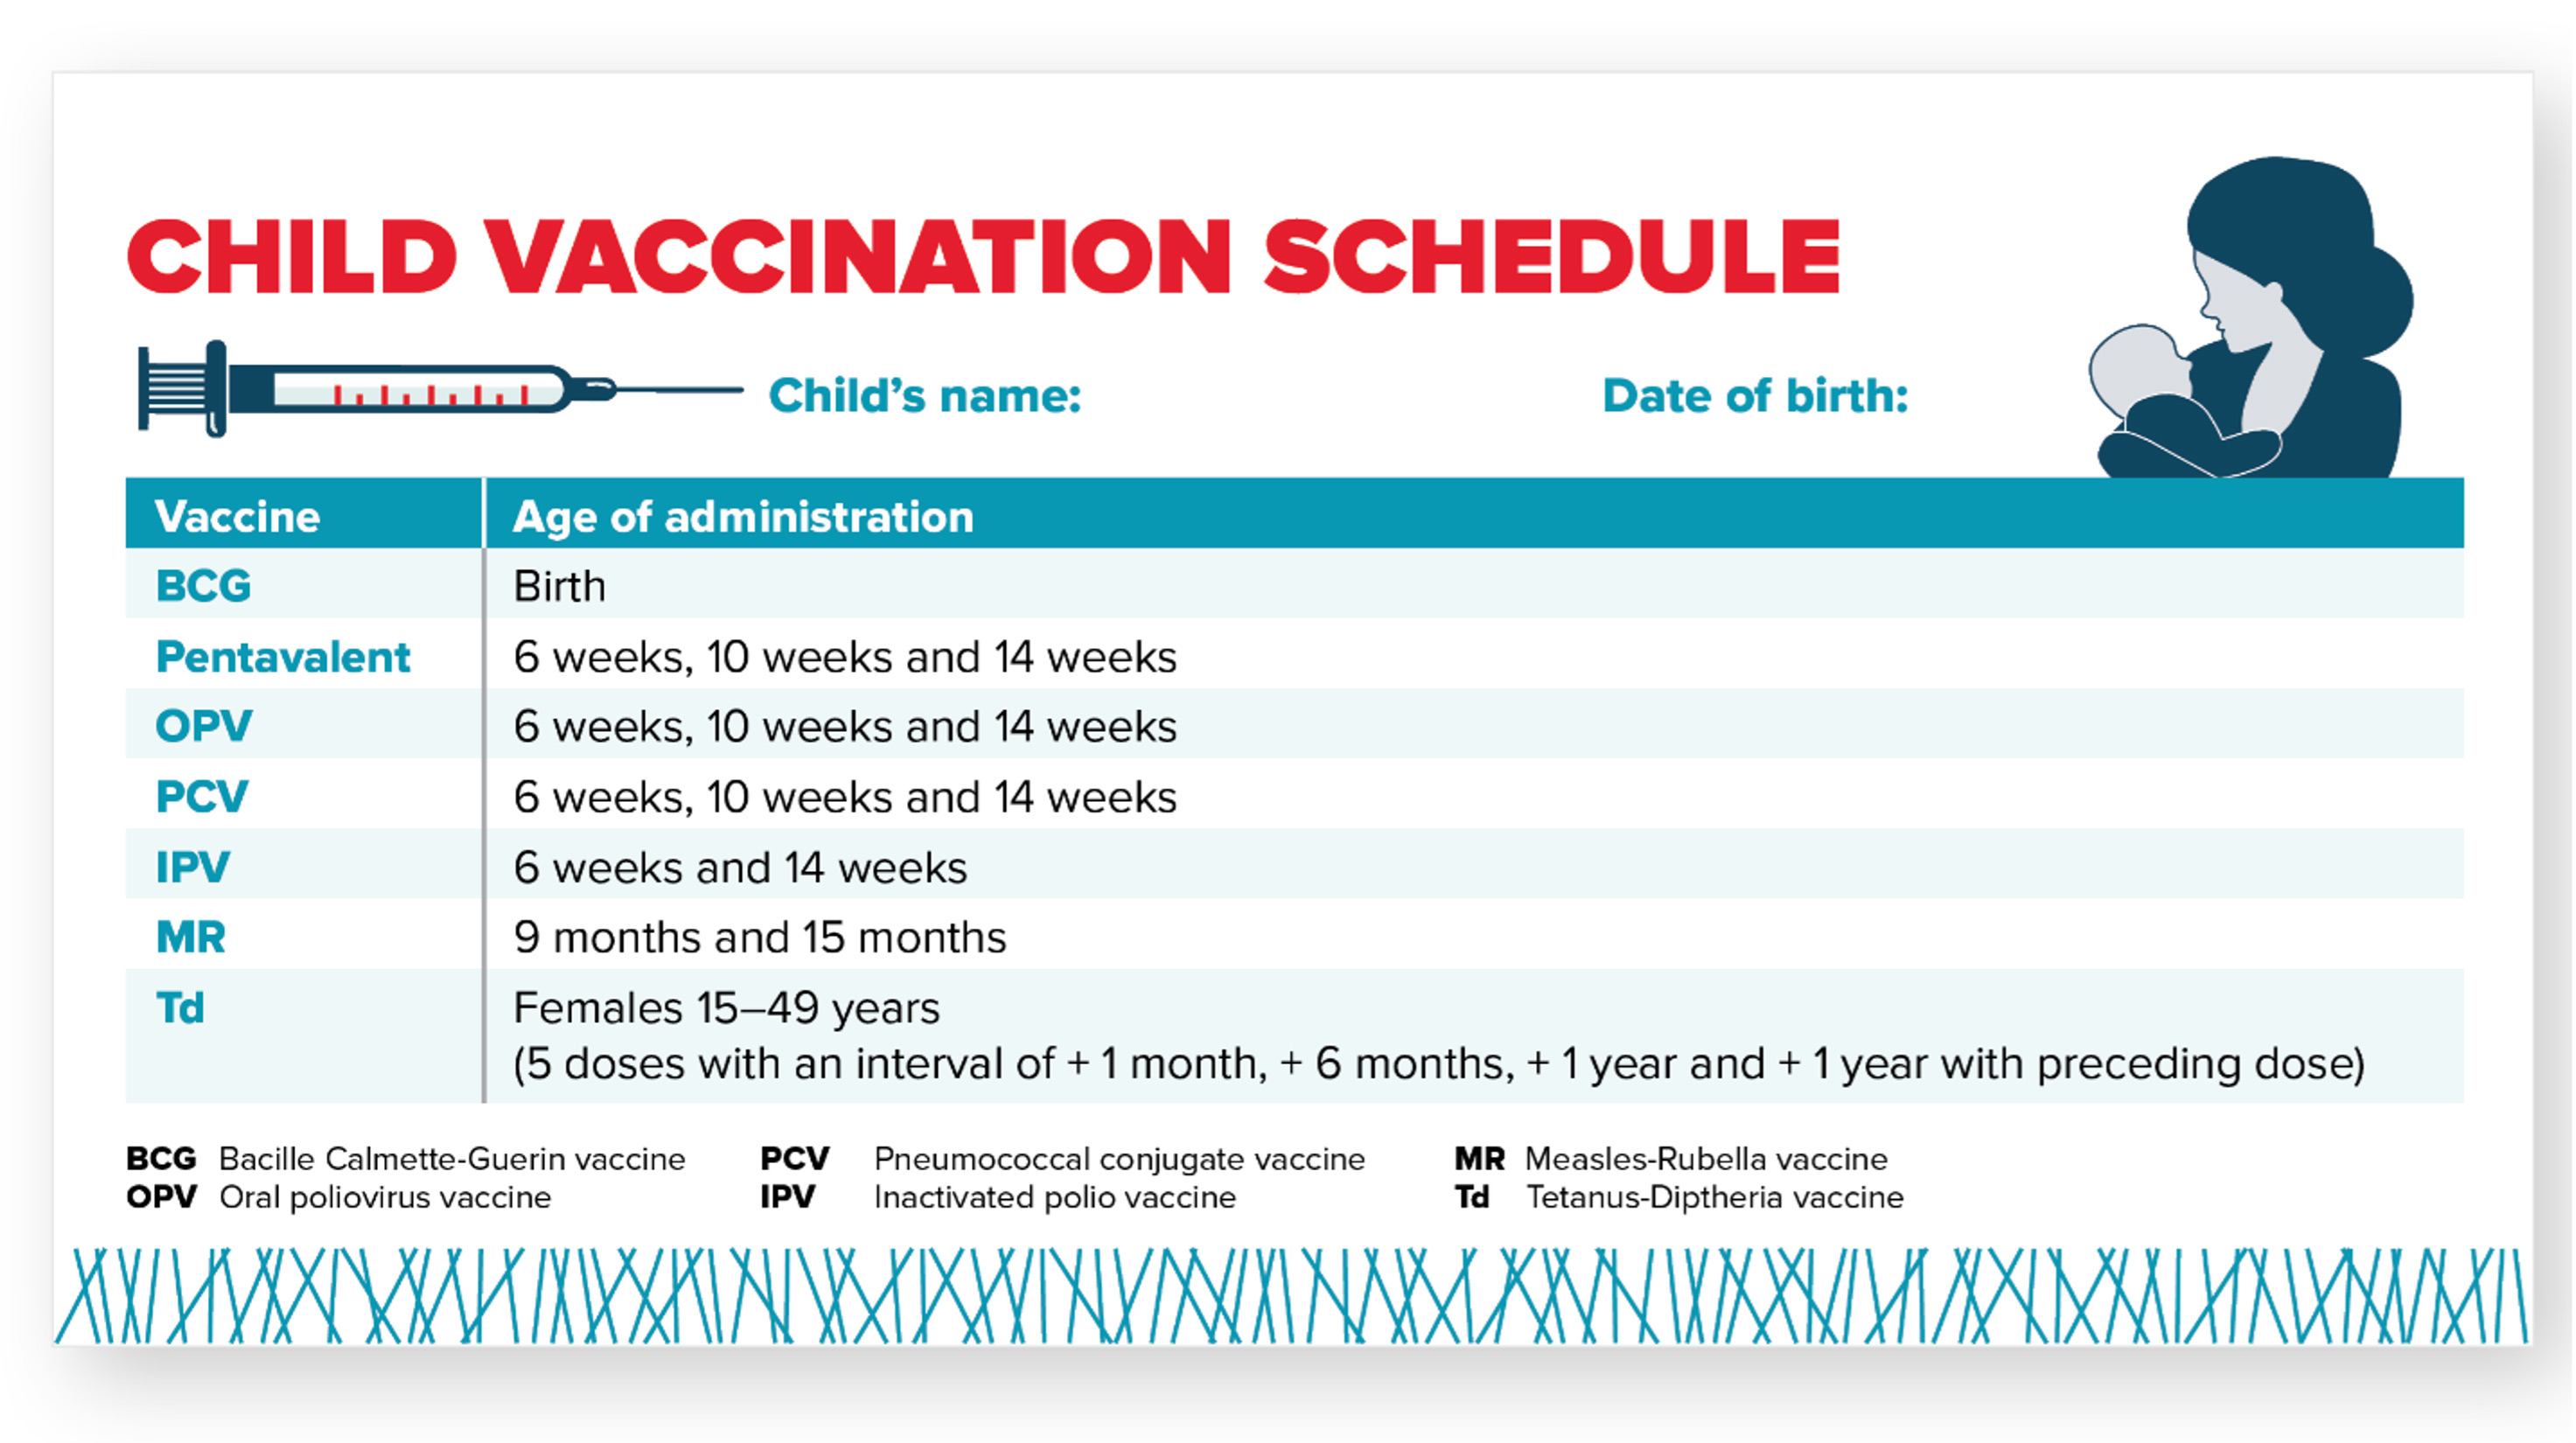 Illustration showing child vaccination schedule